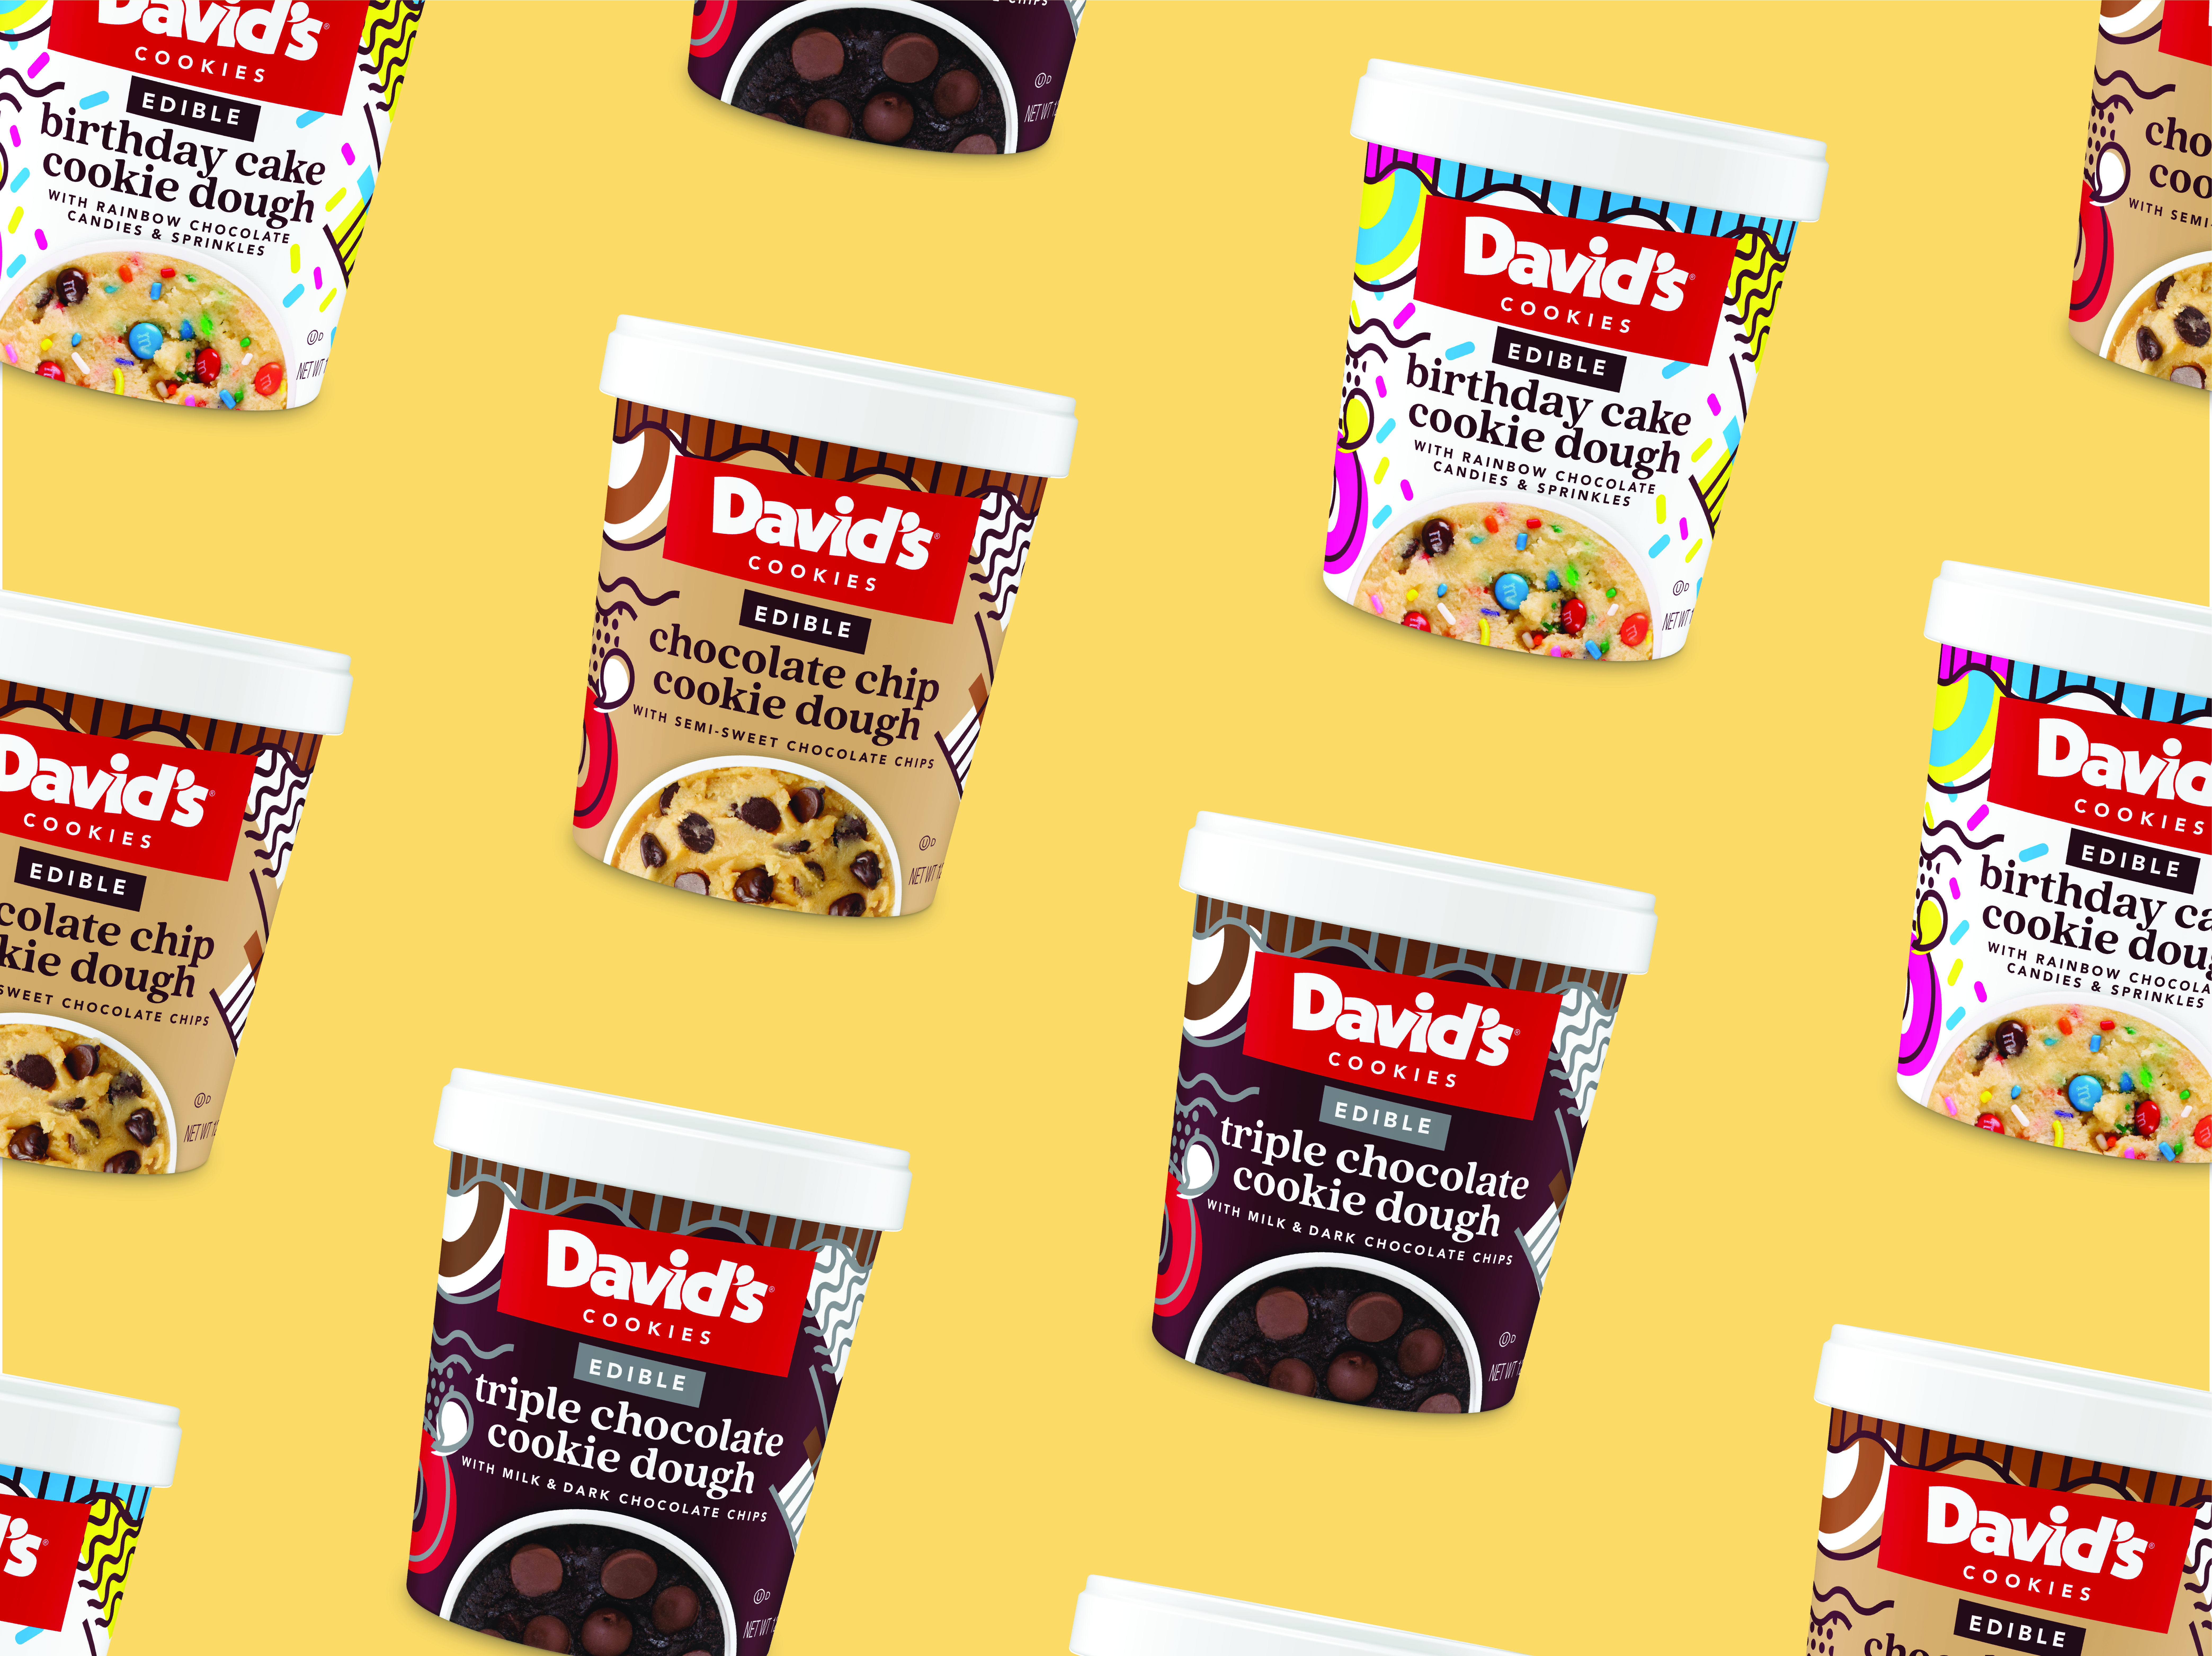 David's Cookies Cookie Dough Packaging Design - Branding by Miller Creative